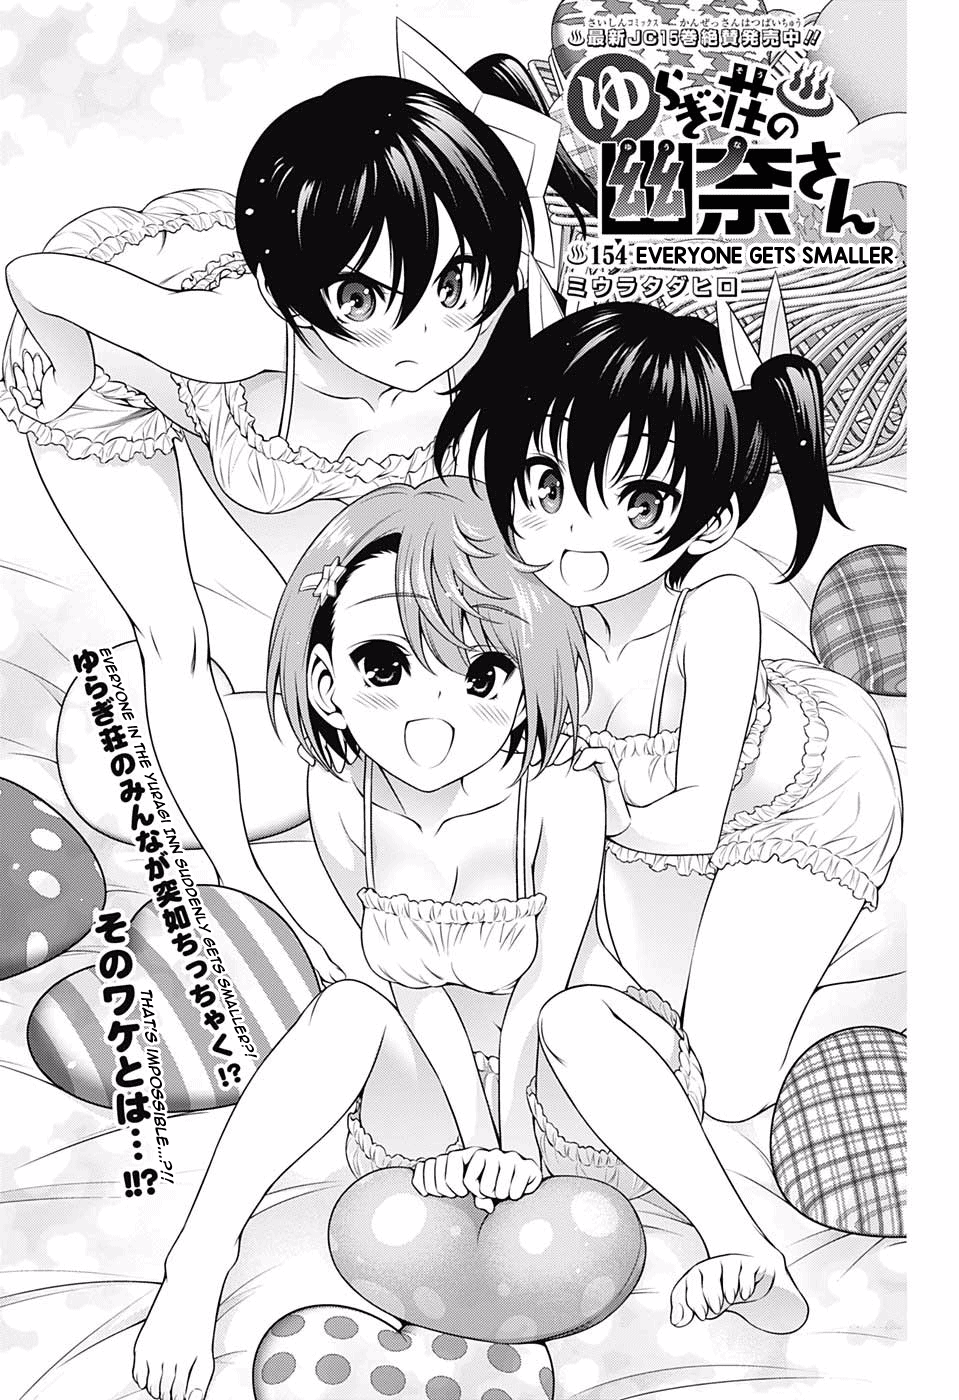 Yuragi-Sou No Yuuna-San Vol.18 Chapter 154: Everyone Gets Smaller - Picture 1